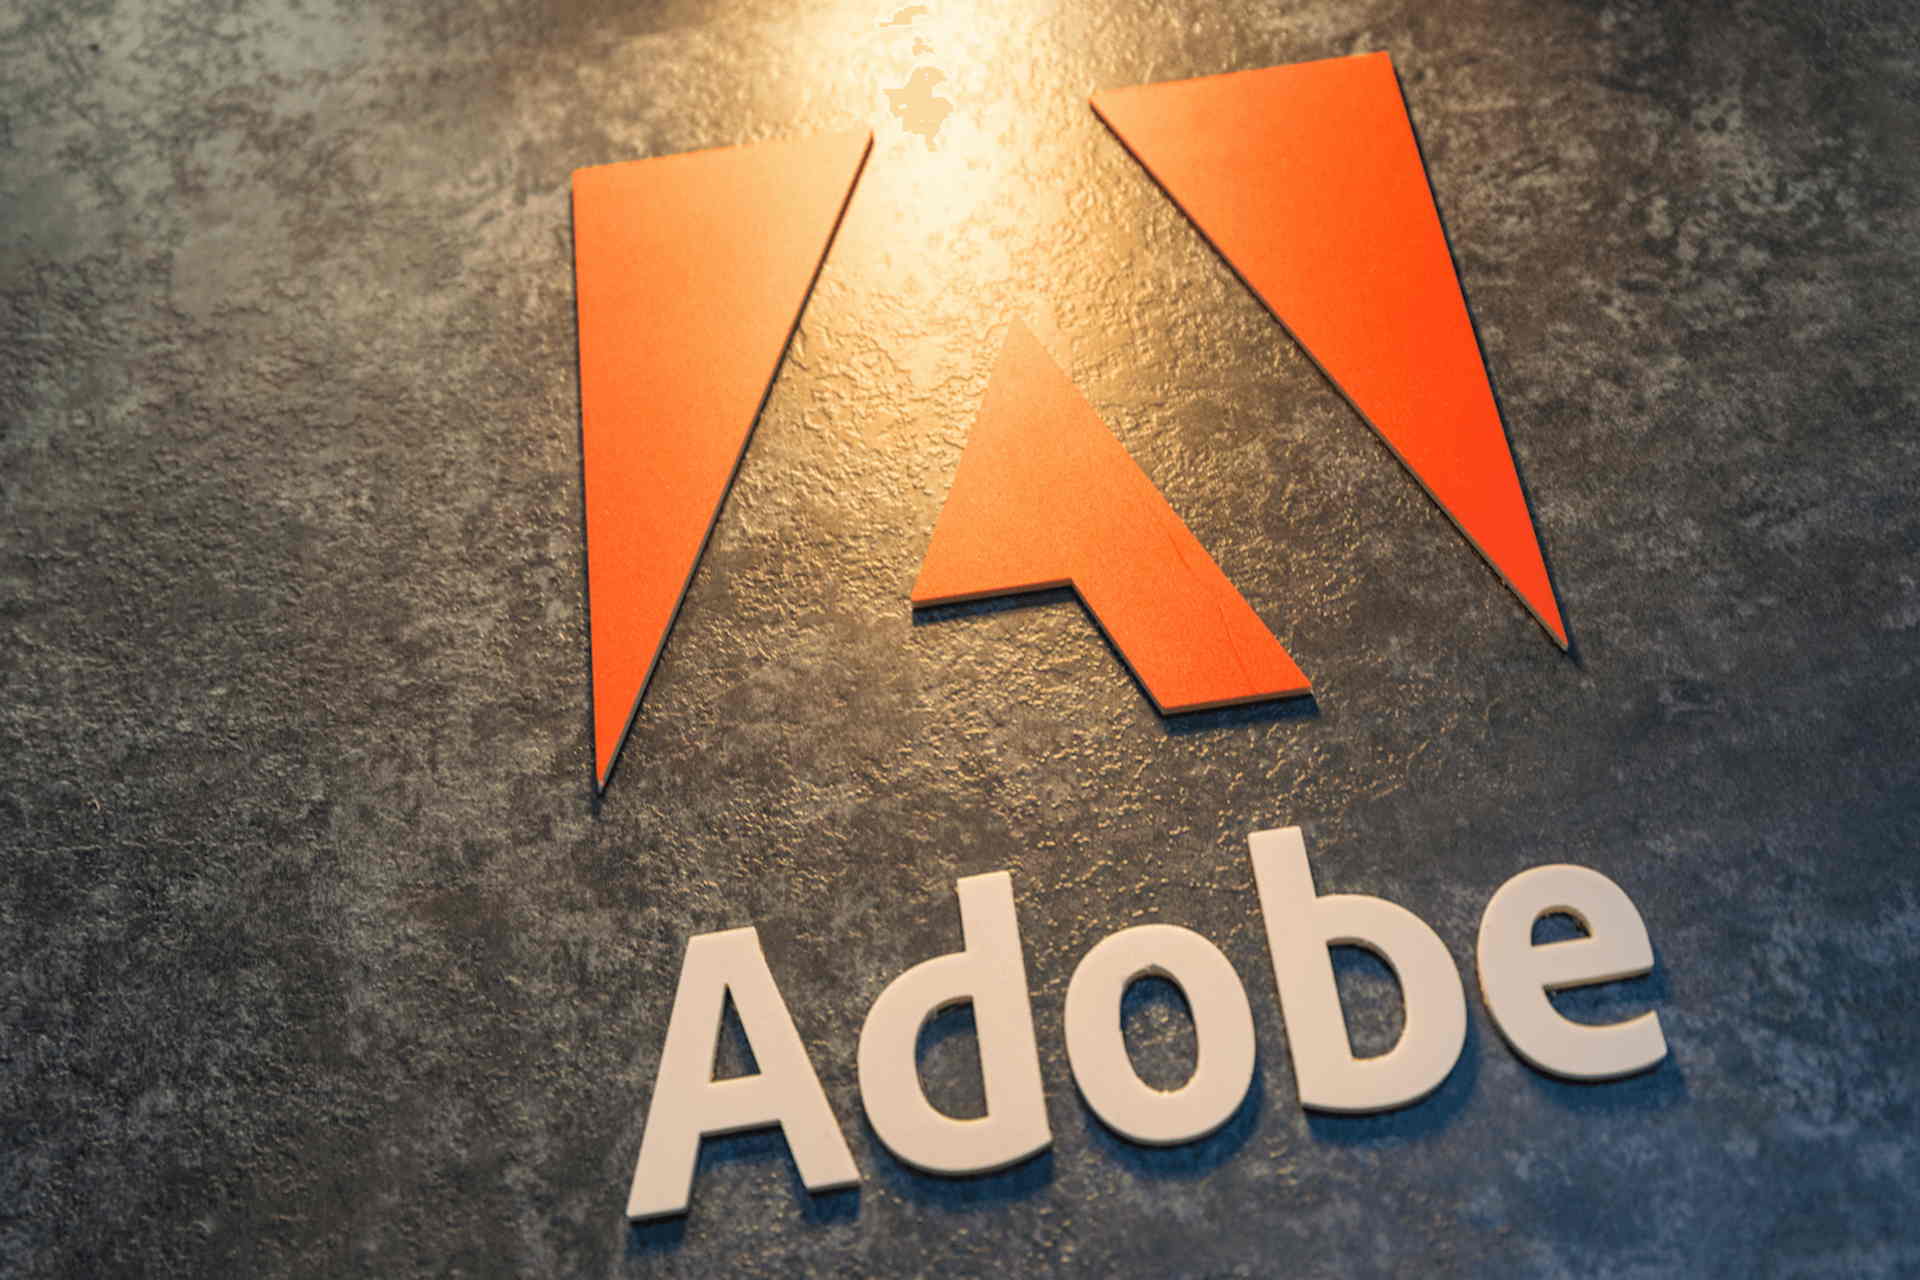 Adobe deals